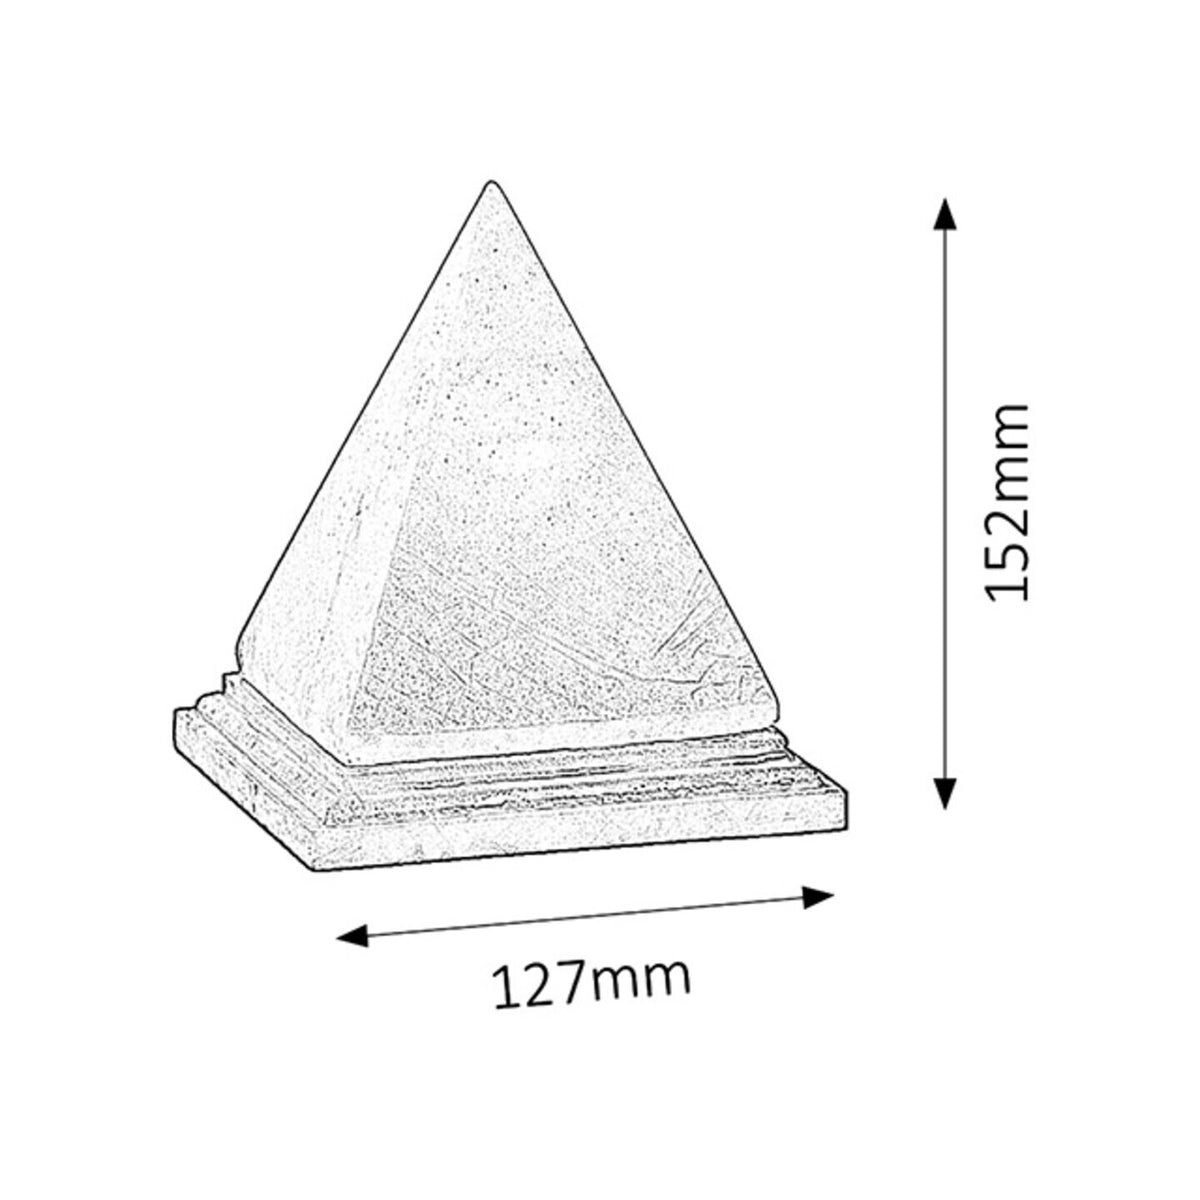 Dekoratívna soľná lampa Rabalux 4096, tvar pyramídy